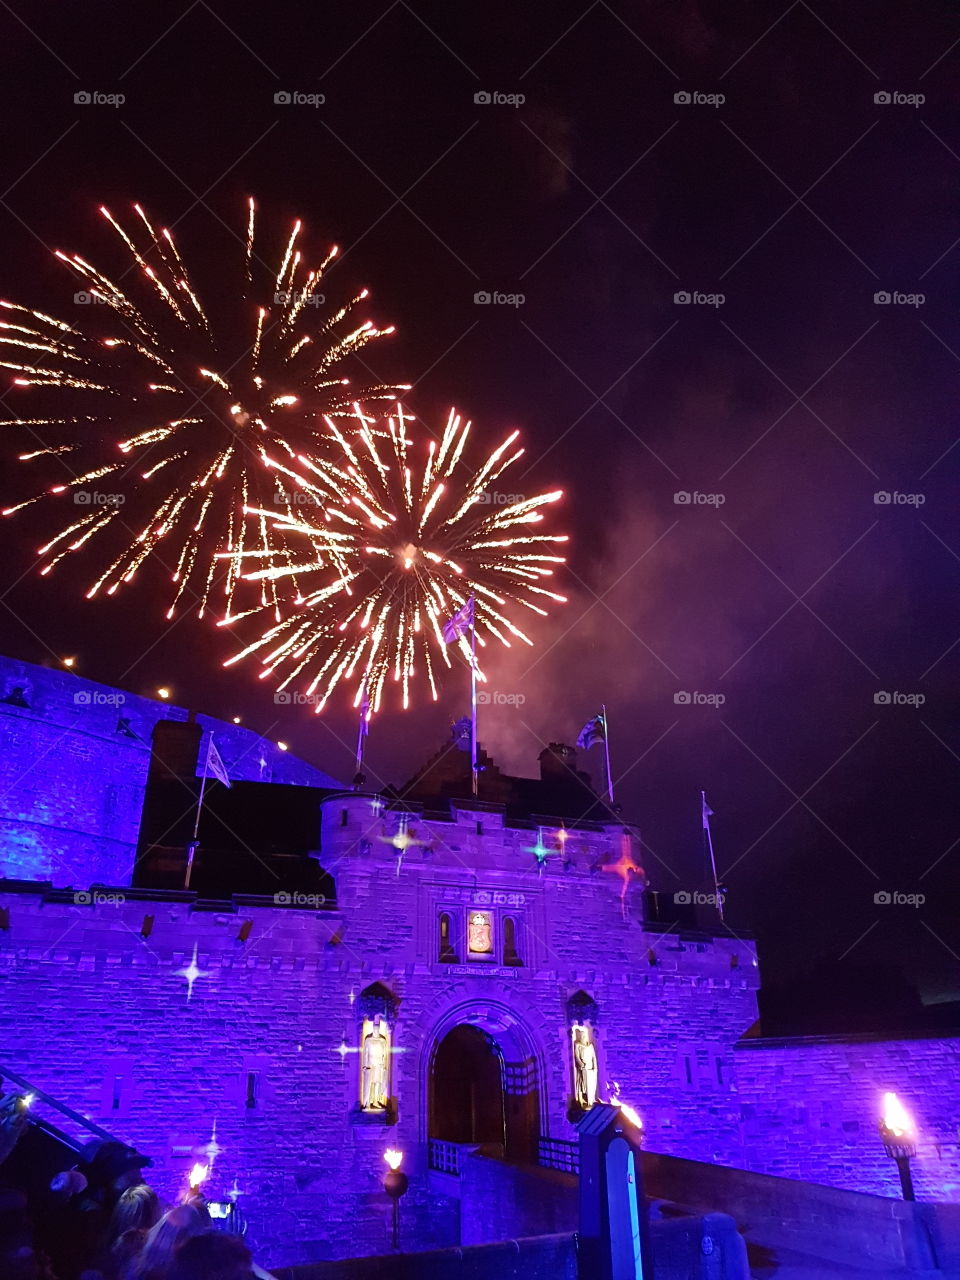 Edinburgh Castle fireworks